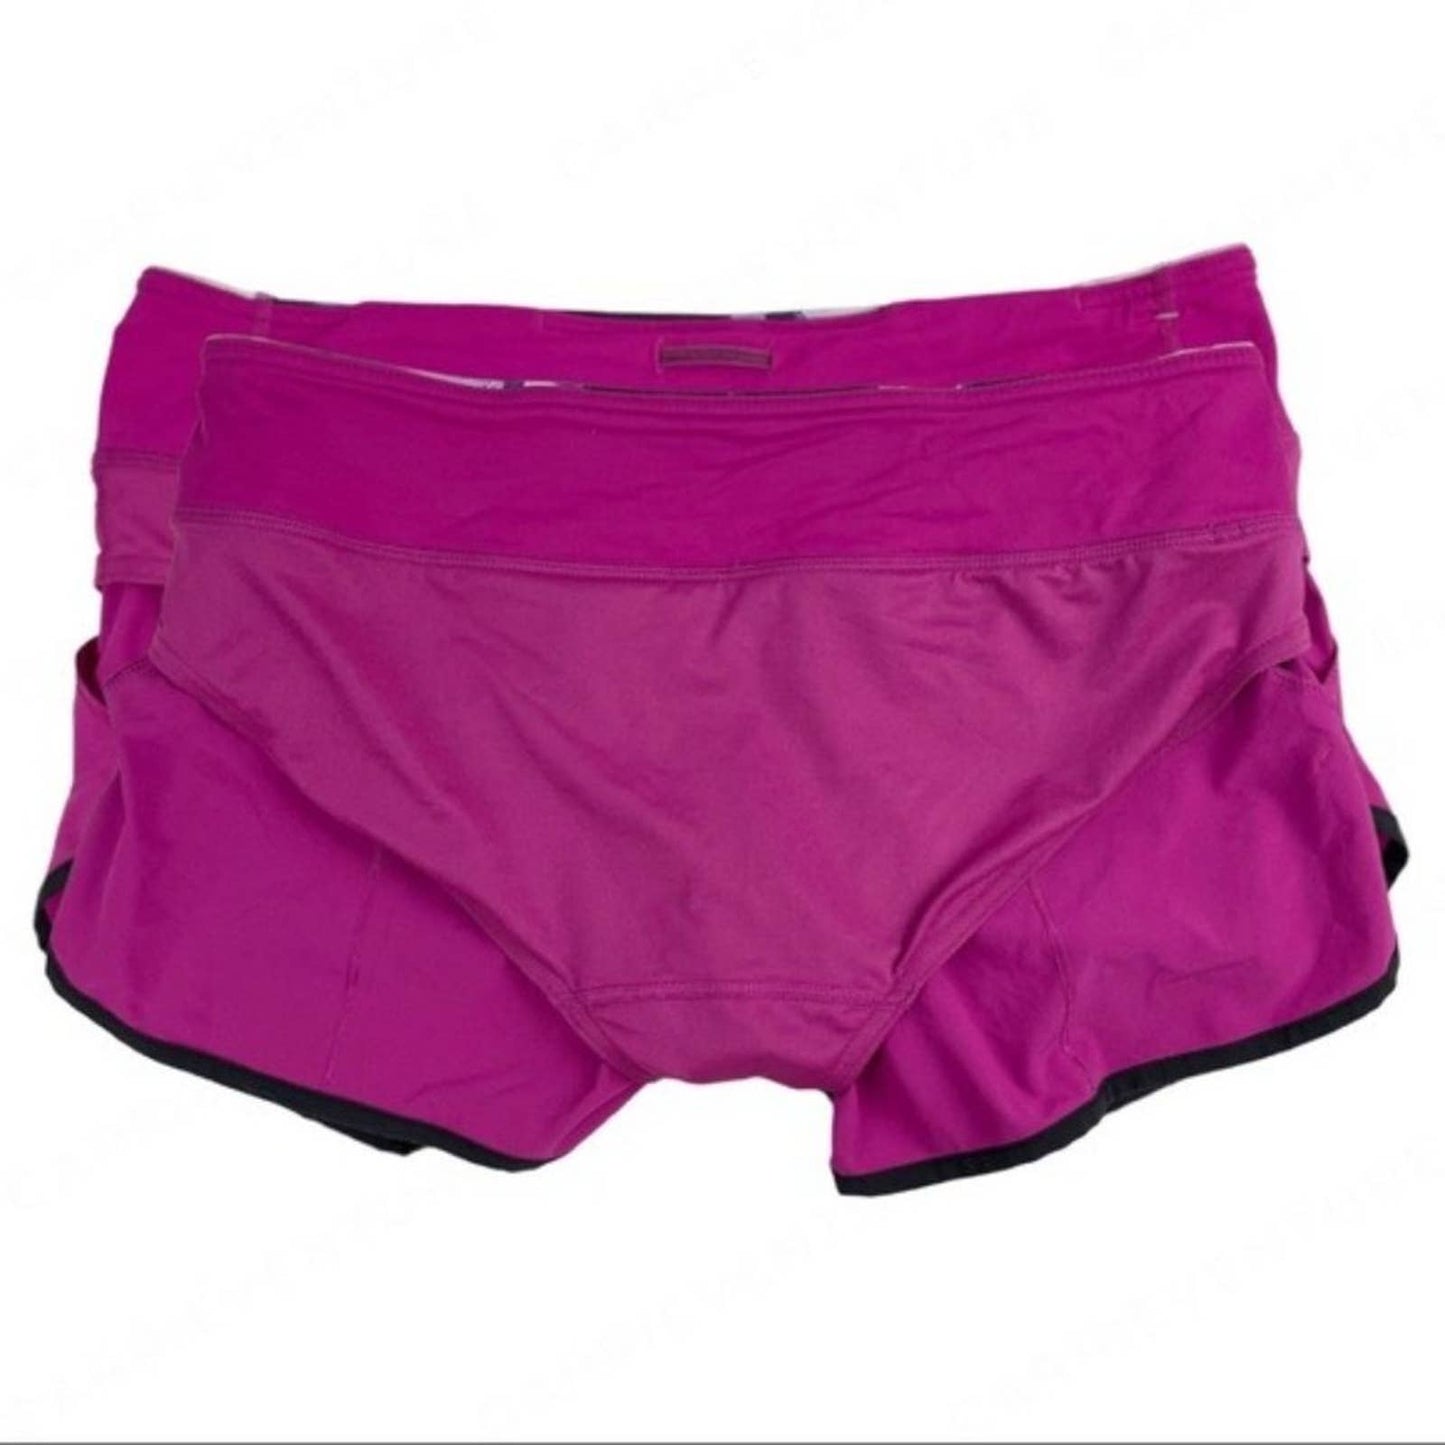 Lululemon Speed Short Raspberry Blooming Pixie Running Athletic Active Shorts Size 8